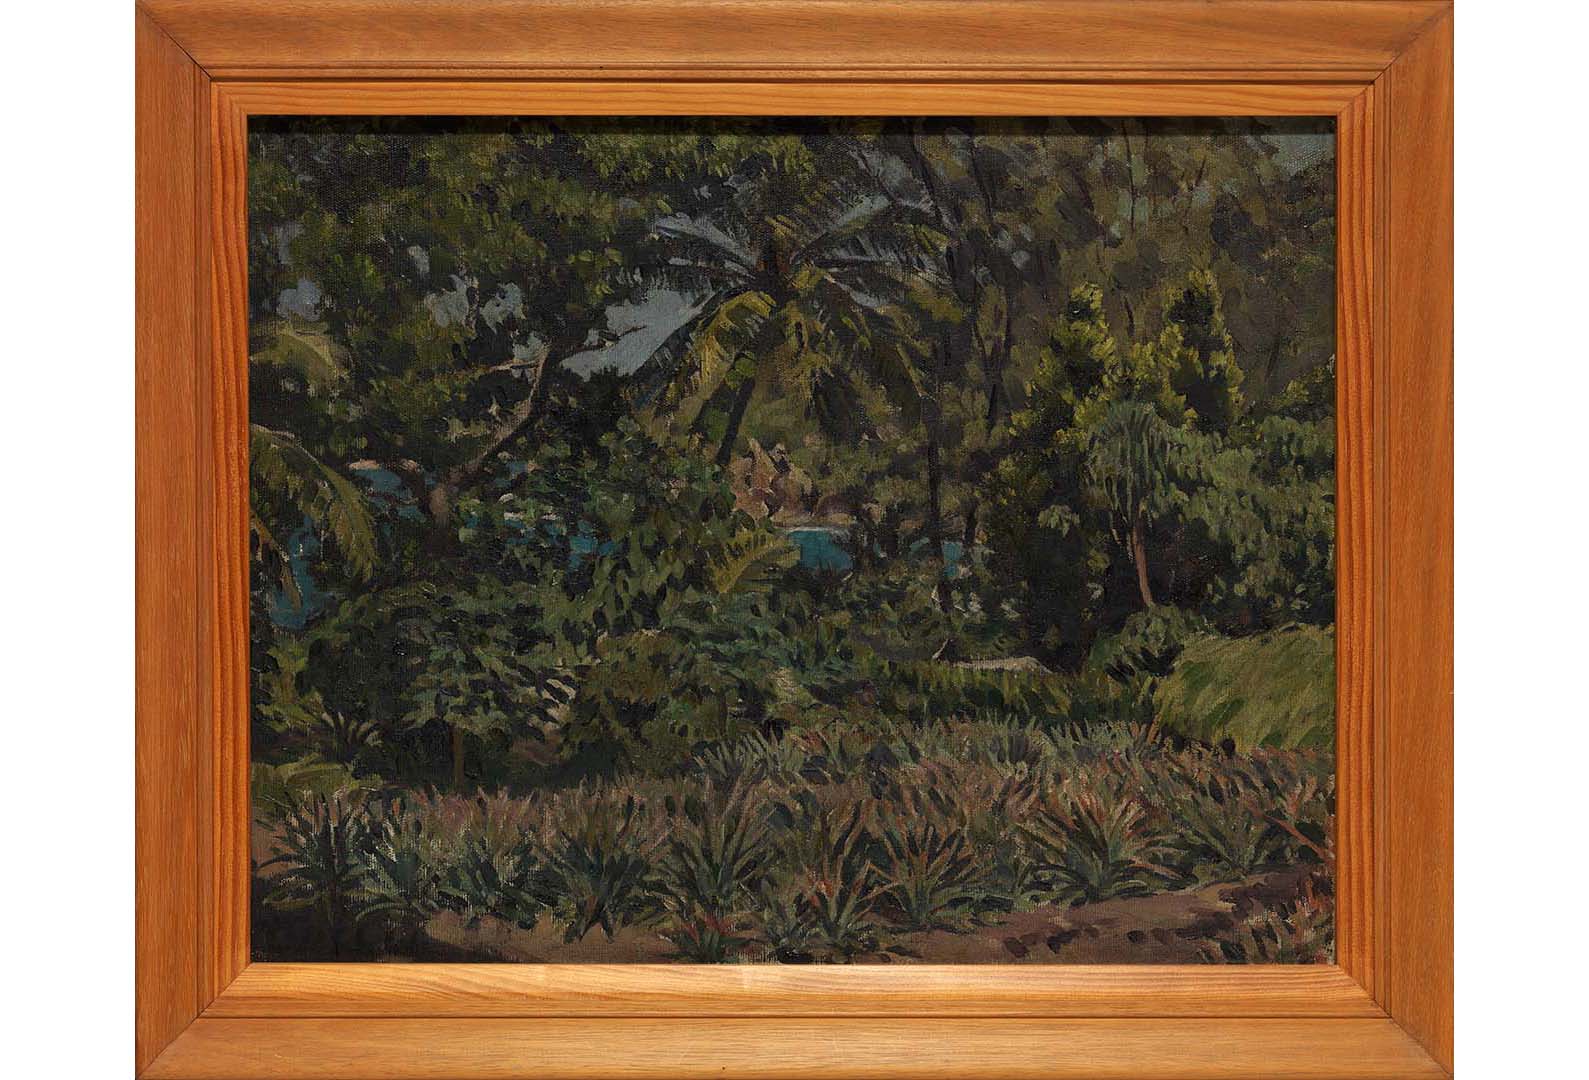 WOOD, Noel Australia b.1912 d.2001 Tropical landscape c.1940-50 Oil on canvas on plywood 47.6 x 62cm Acc. 1:0544 Gift of (Professor) Dr J.V. Dug 1952 courtesy QAGOMA Queensland